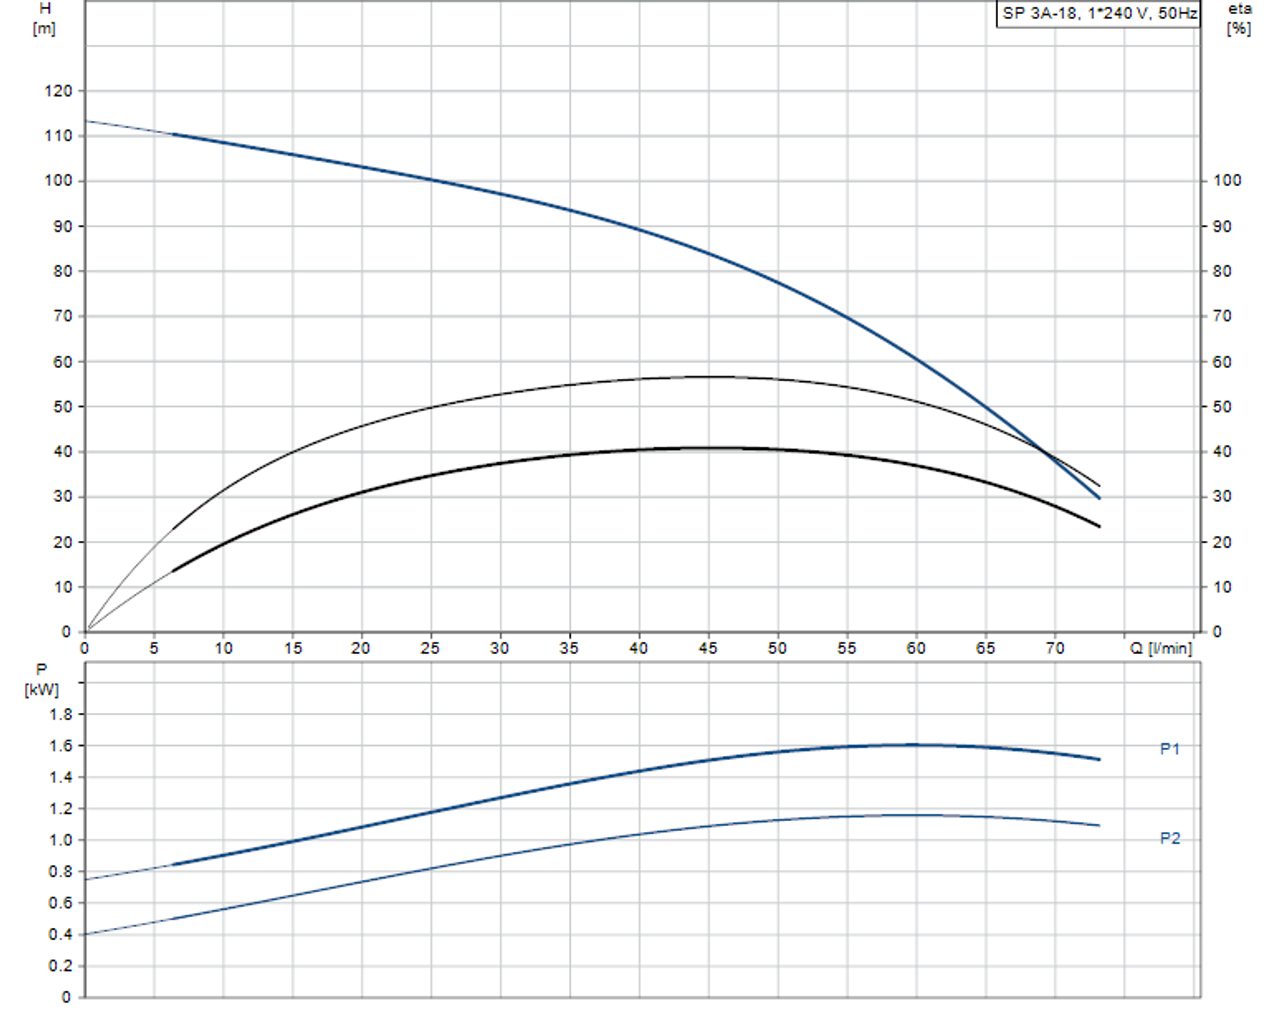 SP 3A-18 Performance Curve